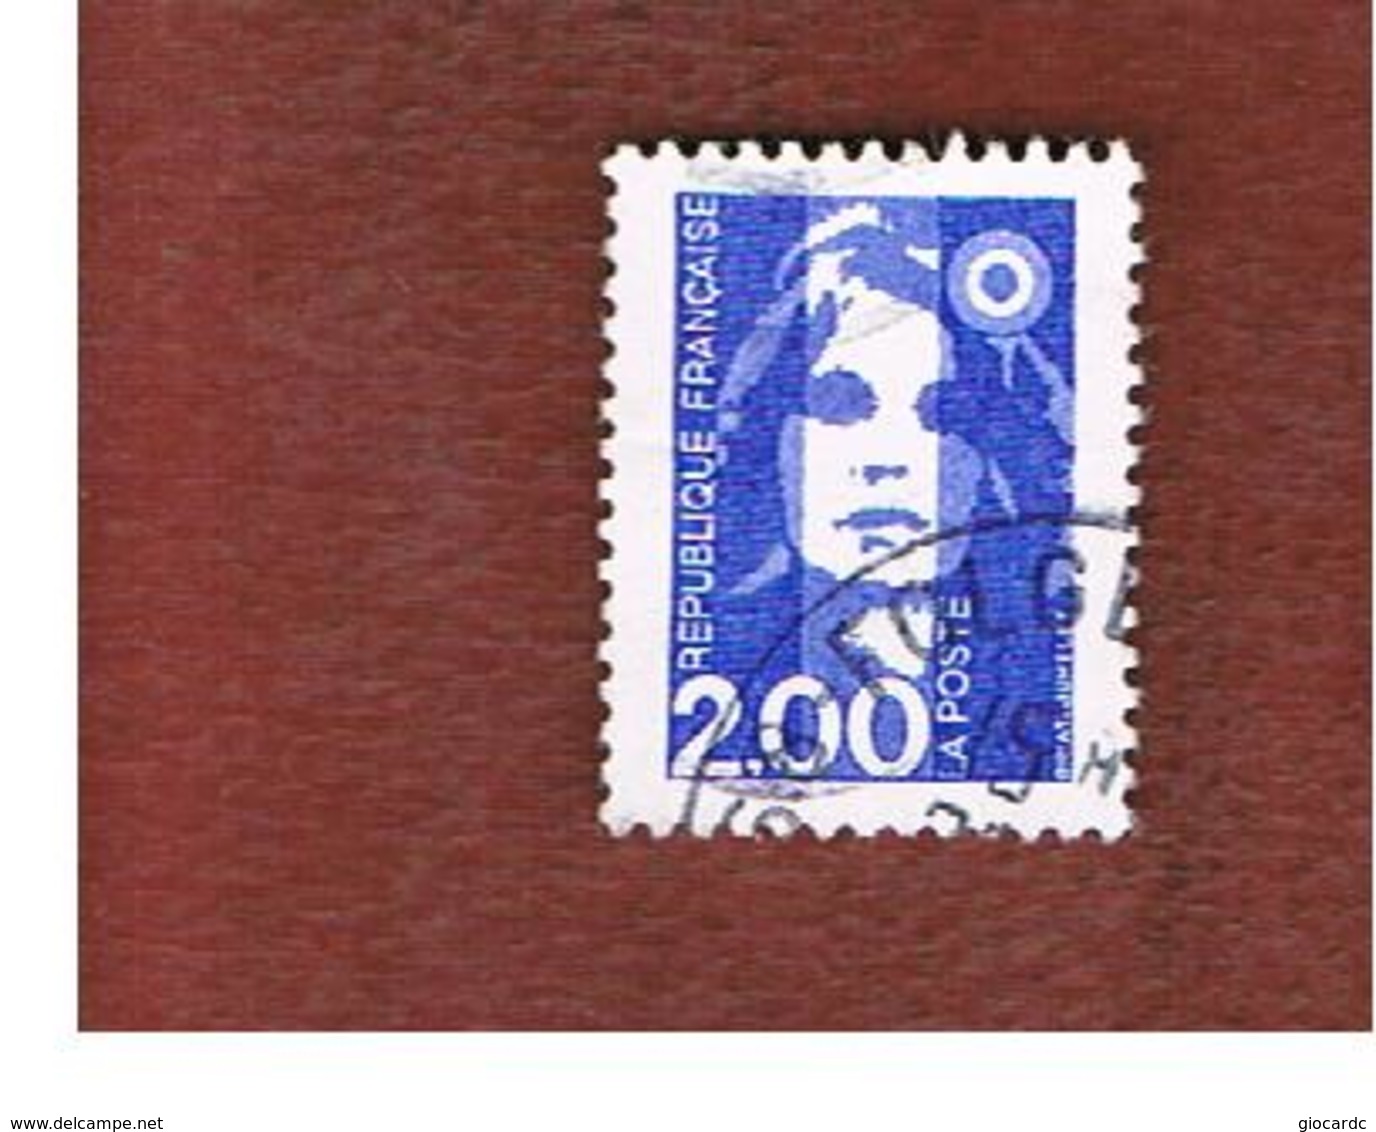 FRANCIA (FRANCE) - SG 2912 - 1994  MARIANNE OF BRIAT  2,00 BLUE   -    USED - Oblitérés